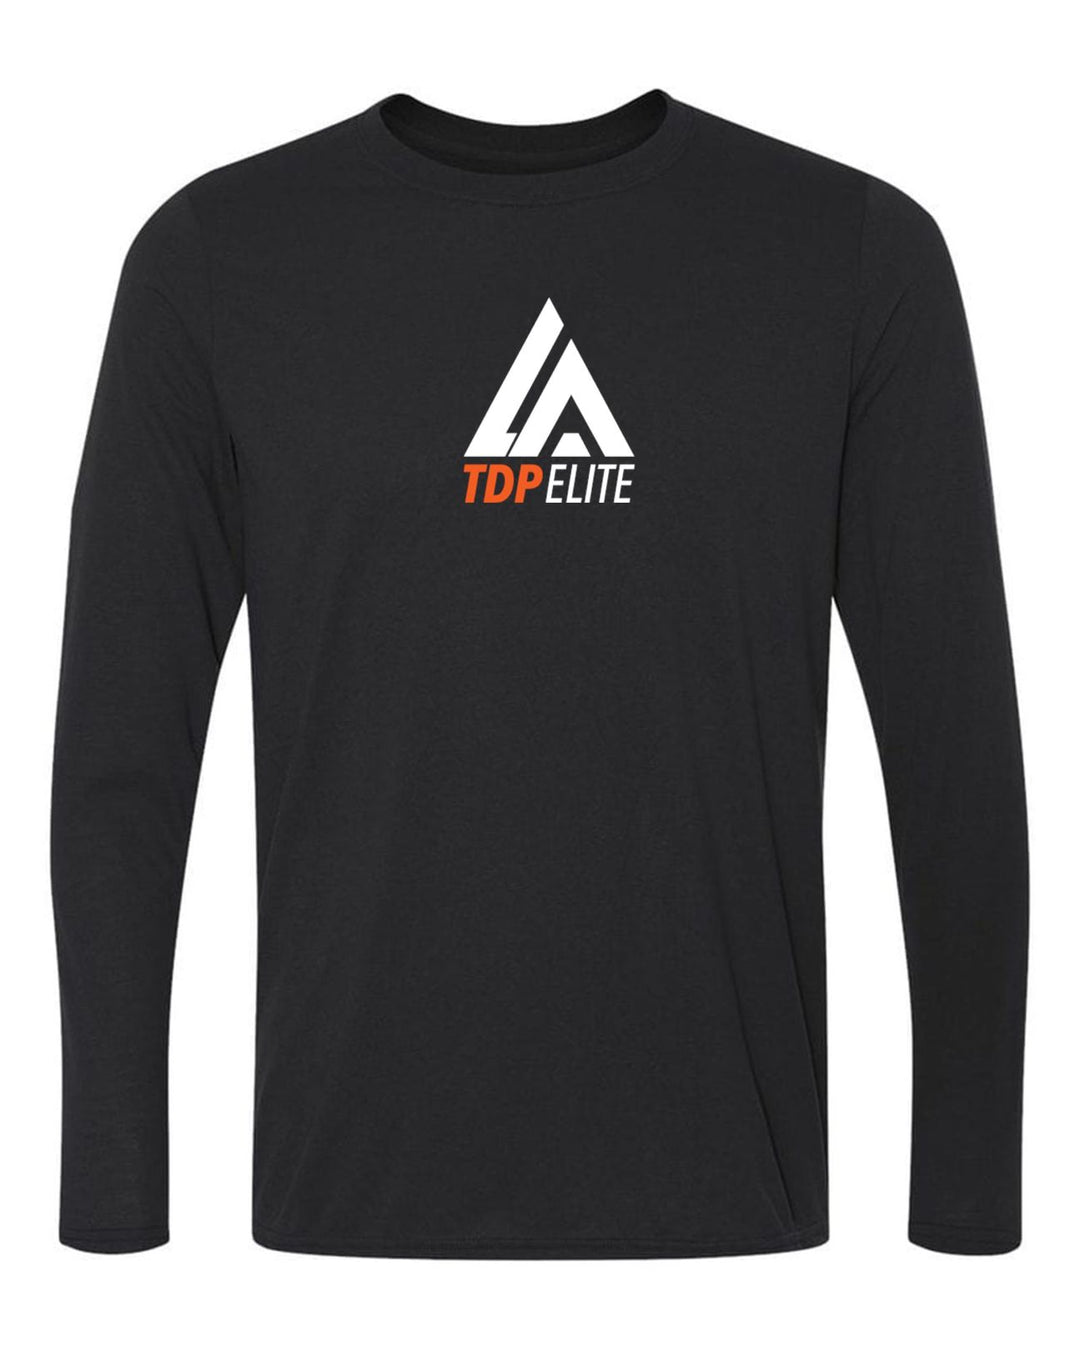 LATDP Elite Long-Sleeve T-Shirt LATDP Spiritwear BLACK MENS LARGE - Third Coast Soccer